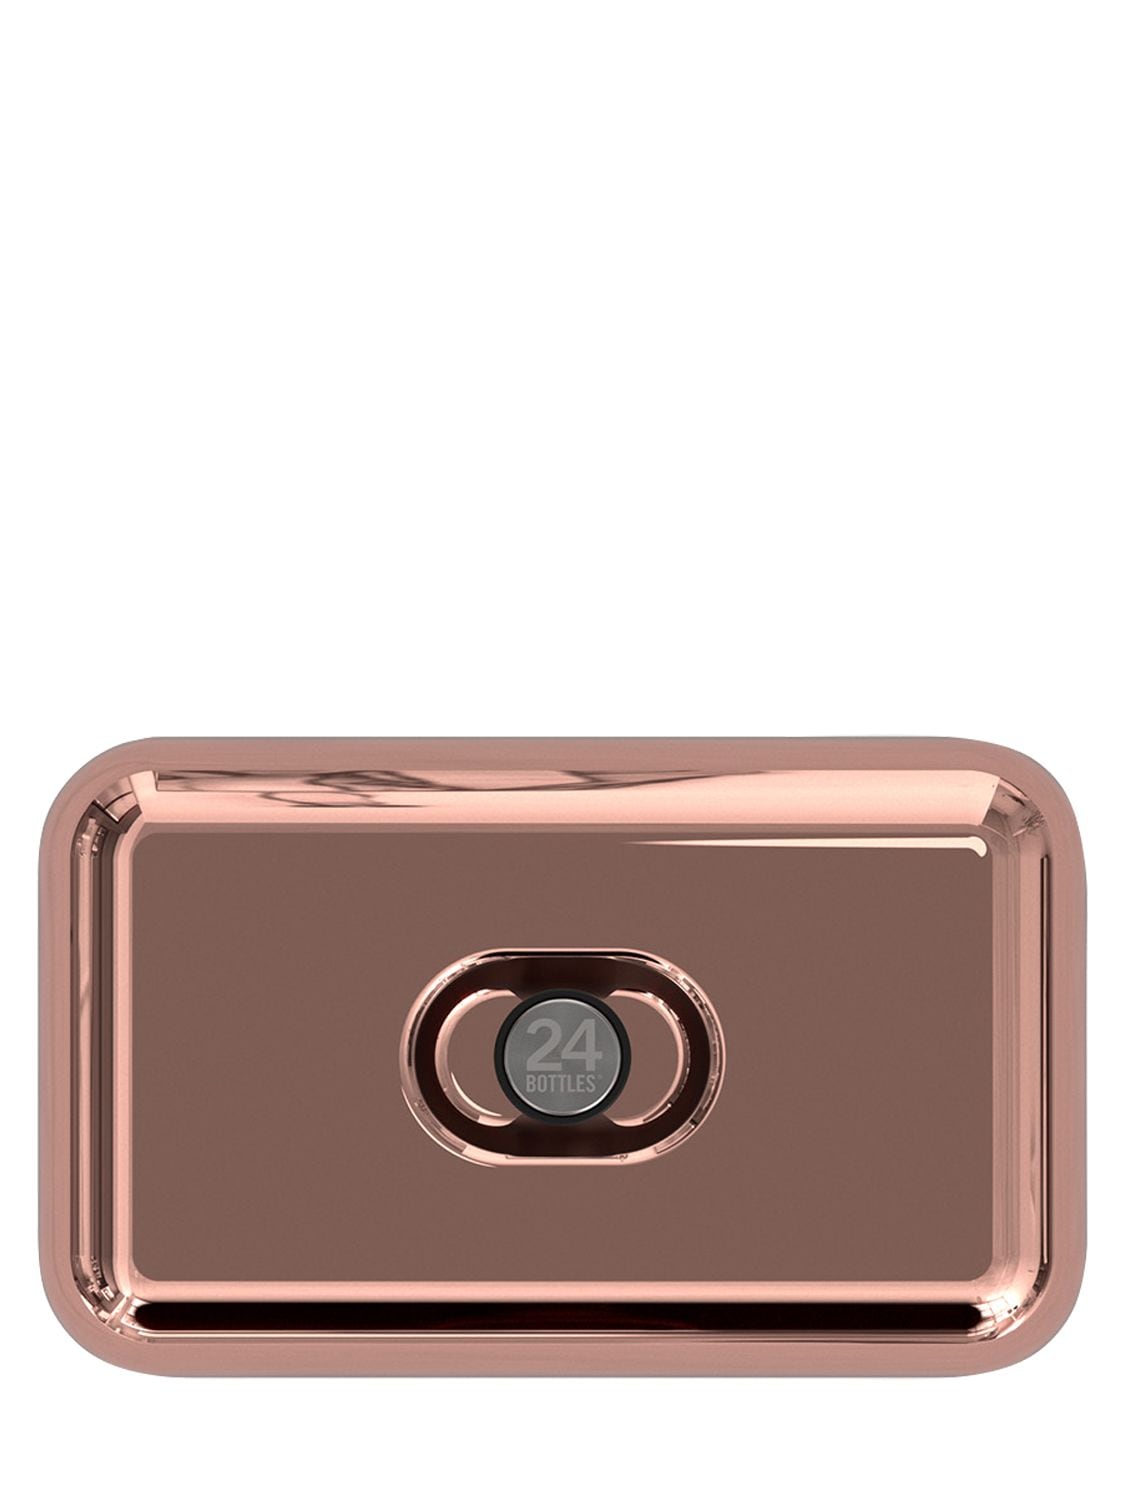 24bottles Rose Gold Lunchbox In Pink